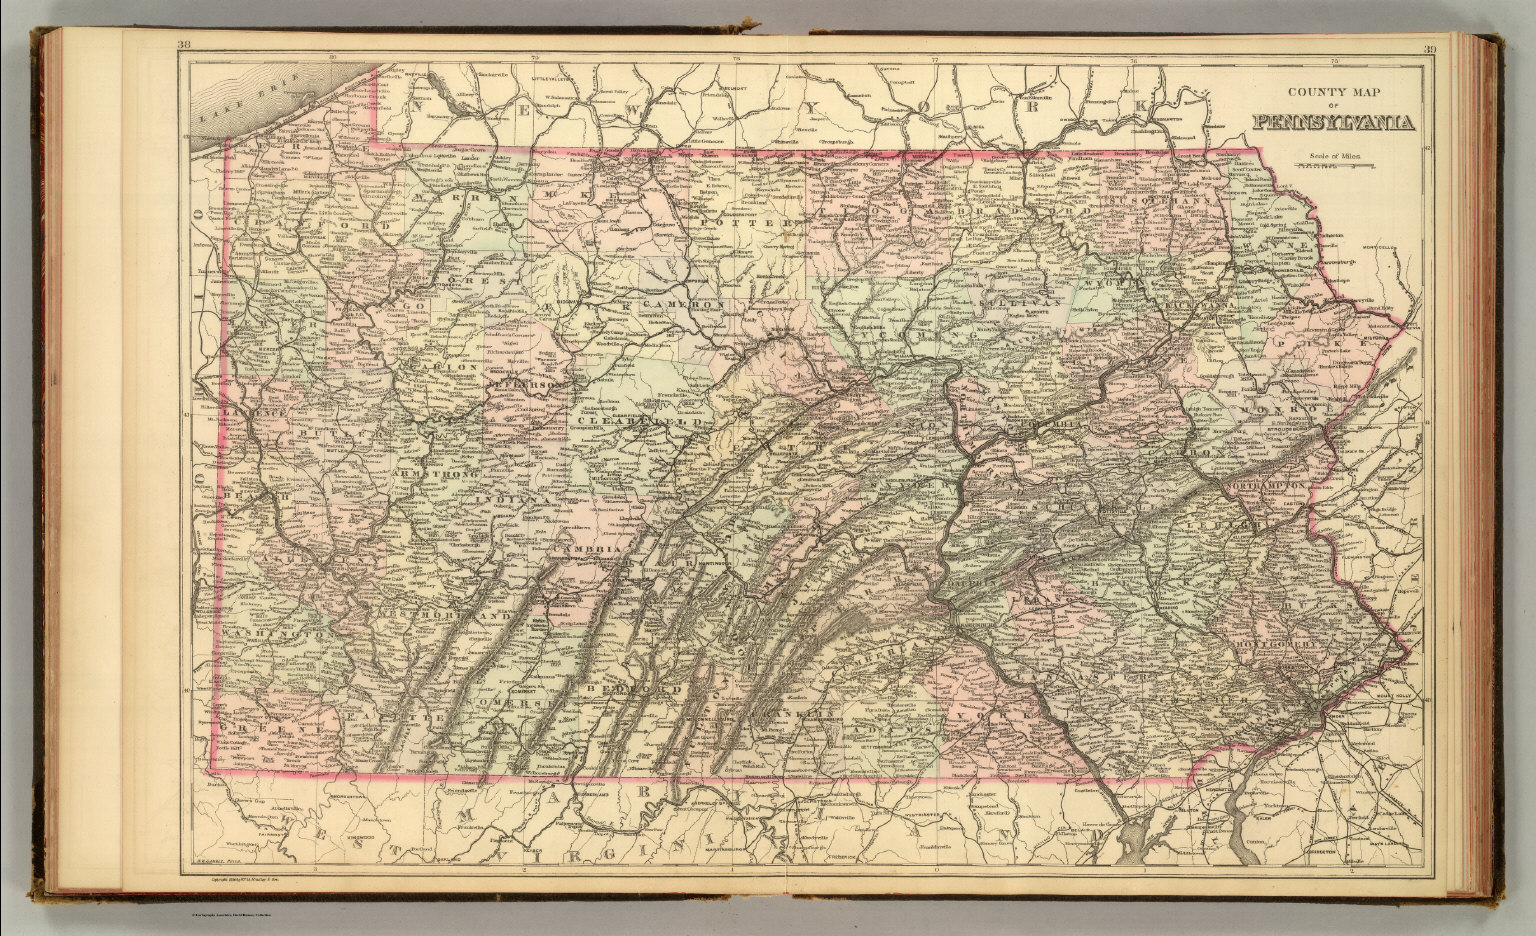 Pennsylvania David Rumsey Historical Map Collection